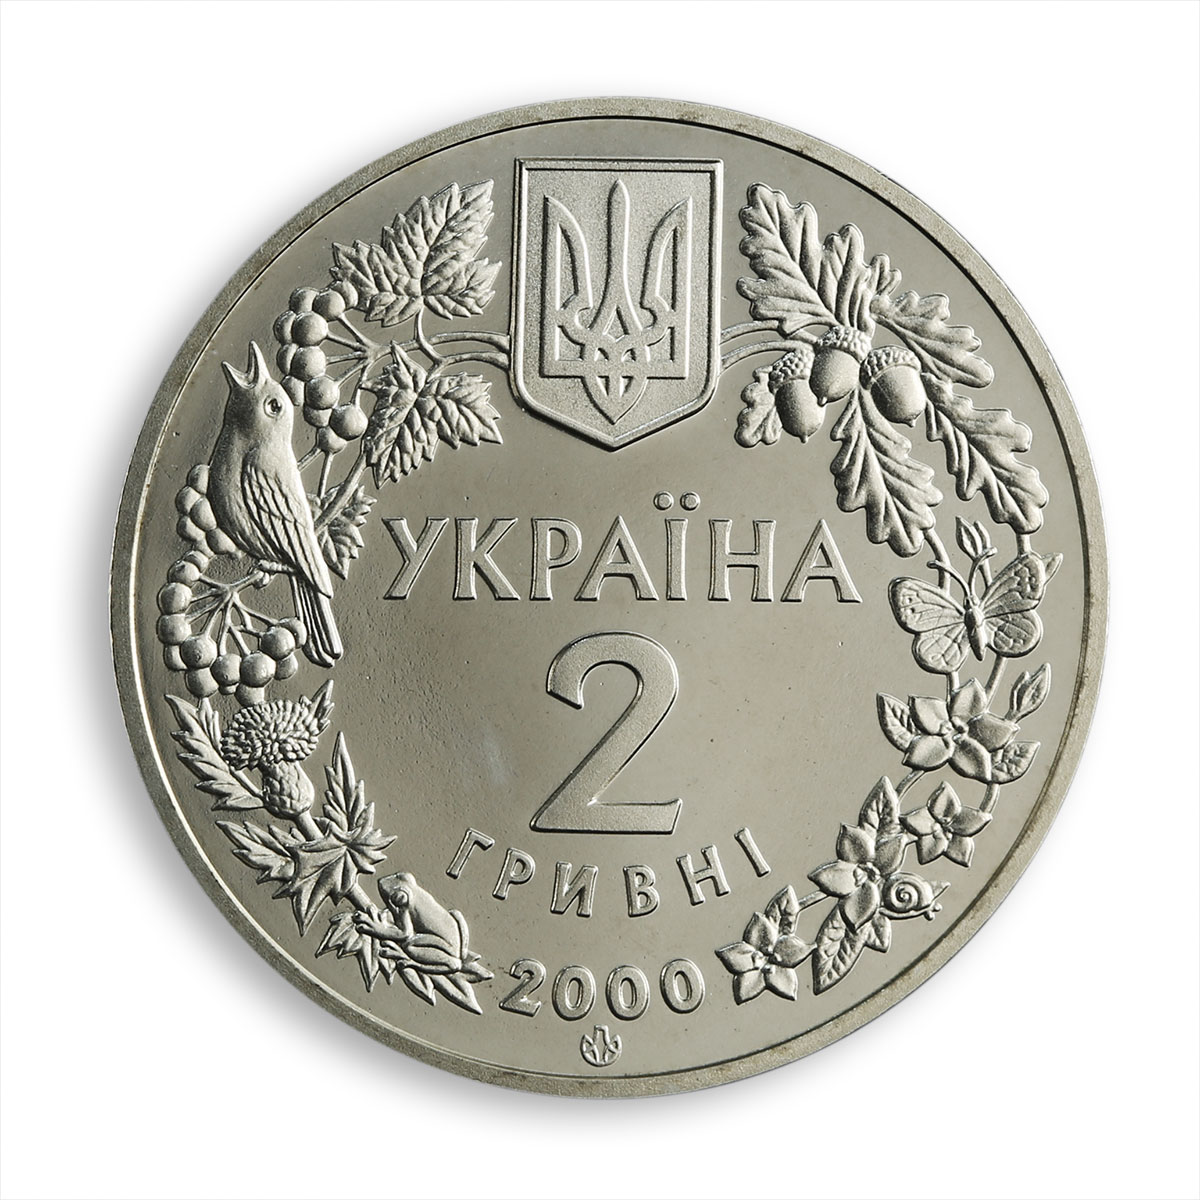 Ukraine 2 hryvnia Potamon Tauricum Freshwater crab fauna animal nickel coin 2000